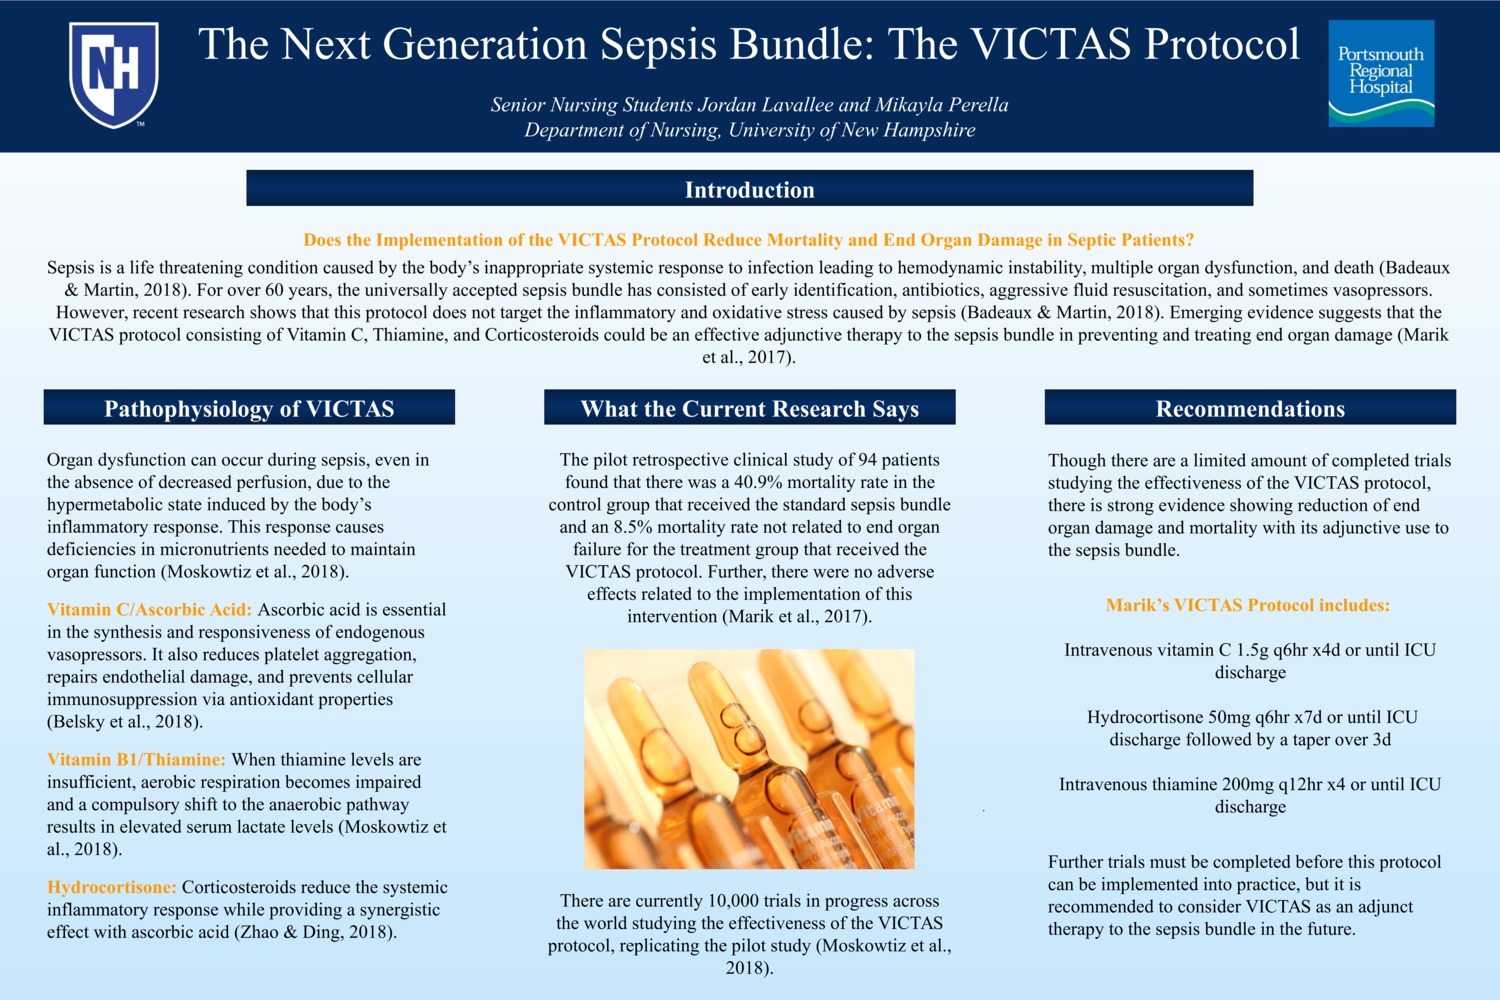 The Next Generation Sepsis Bundle: The Victas Protocol  by Jel1007